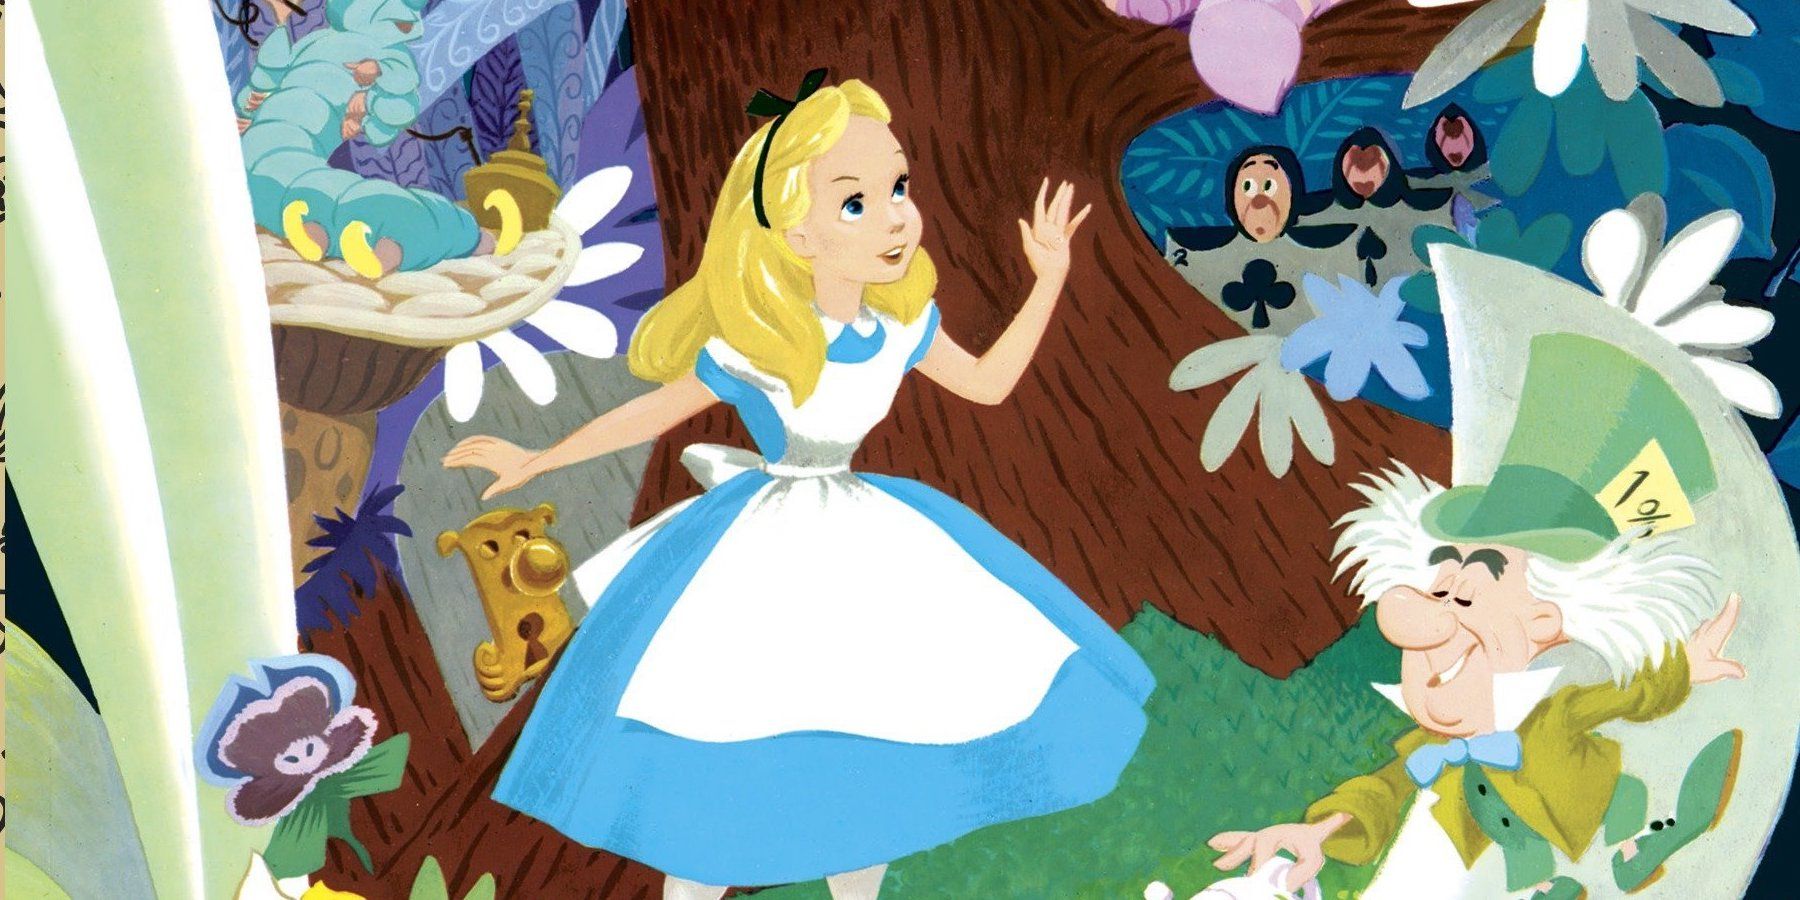 Alice Meeting The Characters In Wonderland In Alice in Wonderland